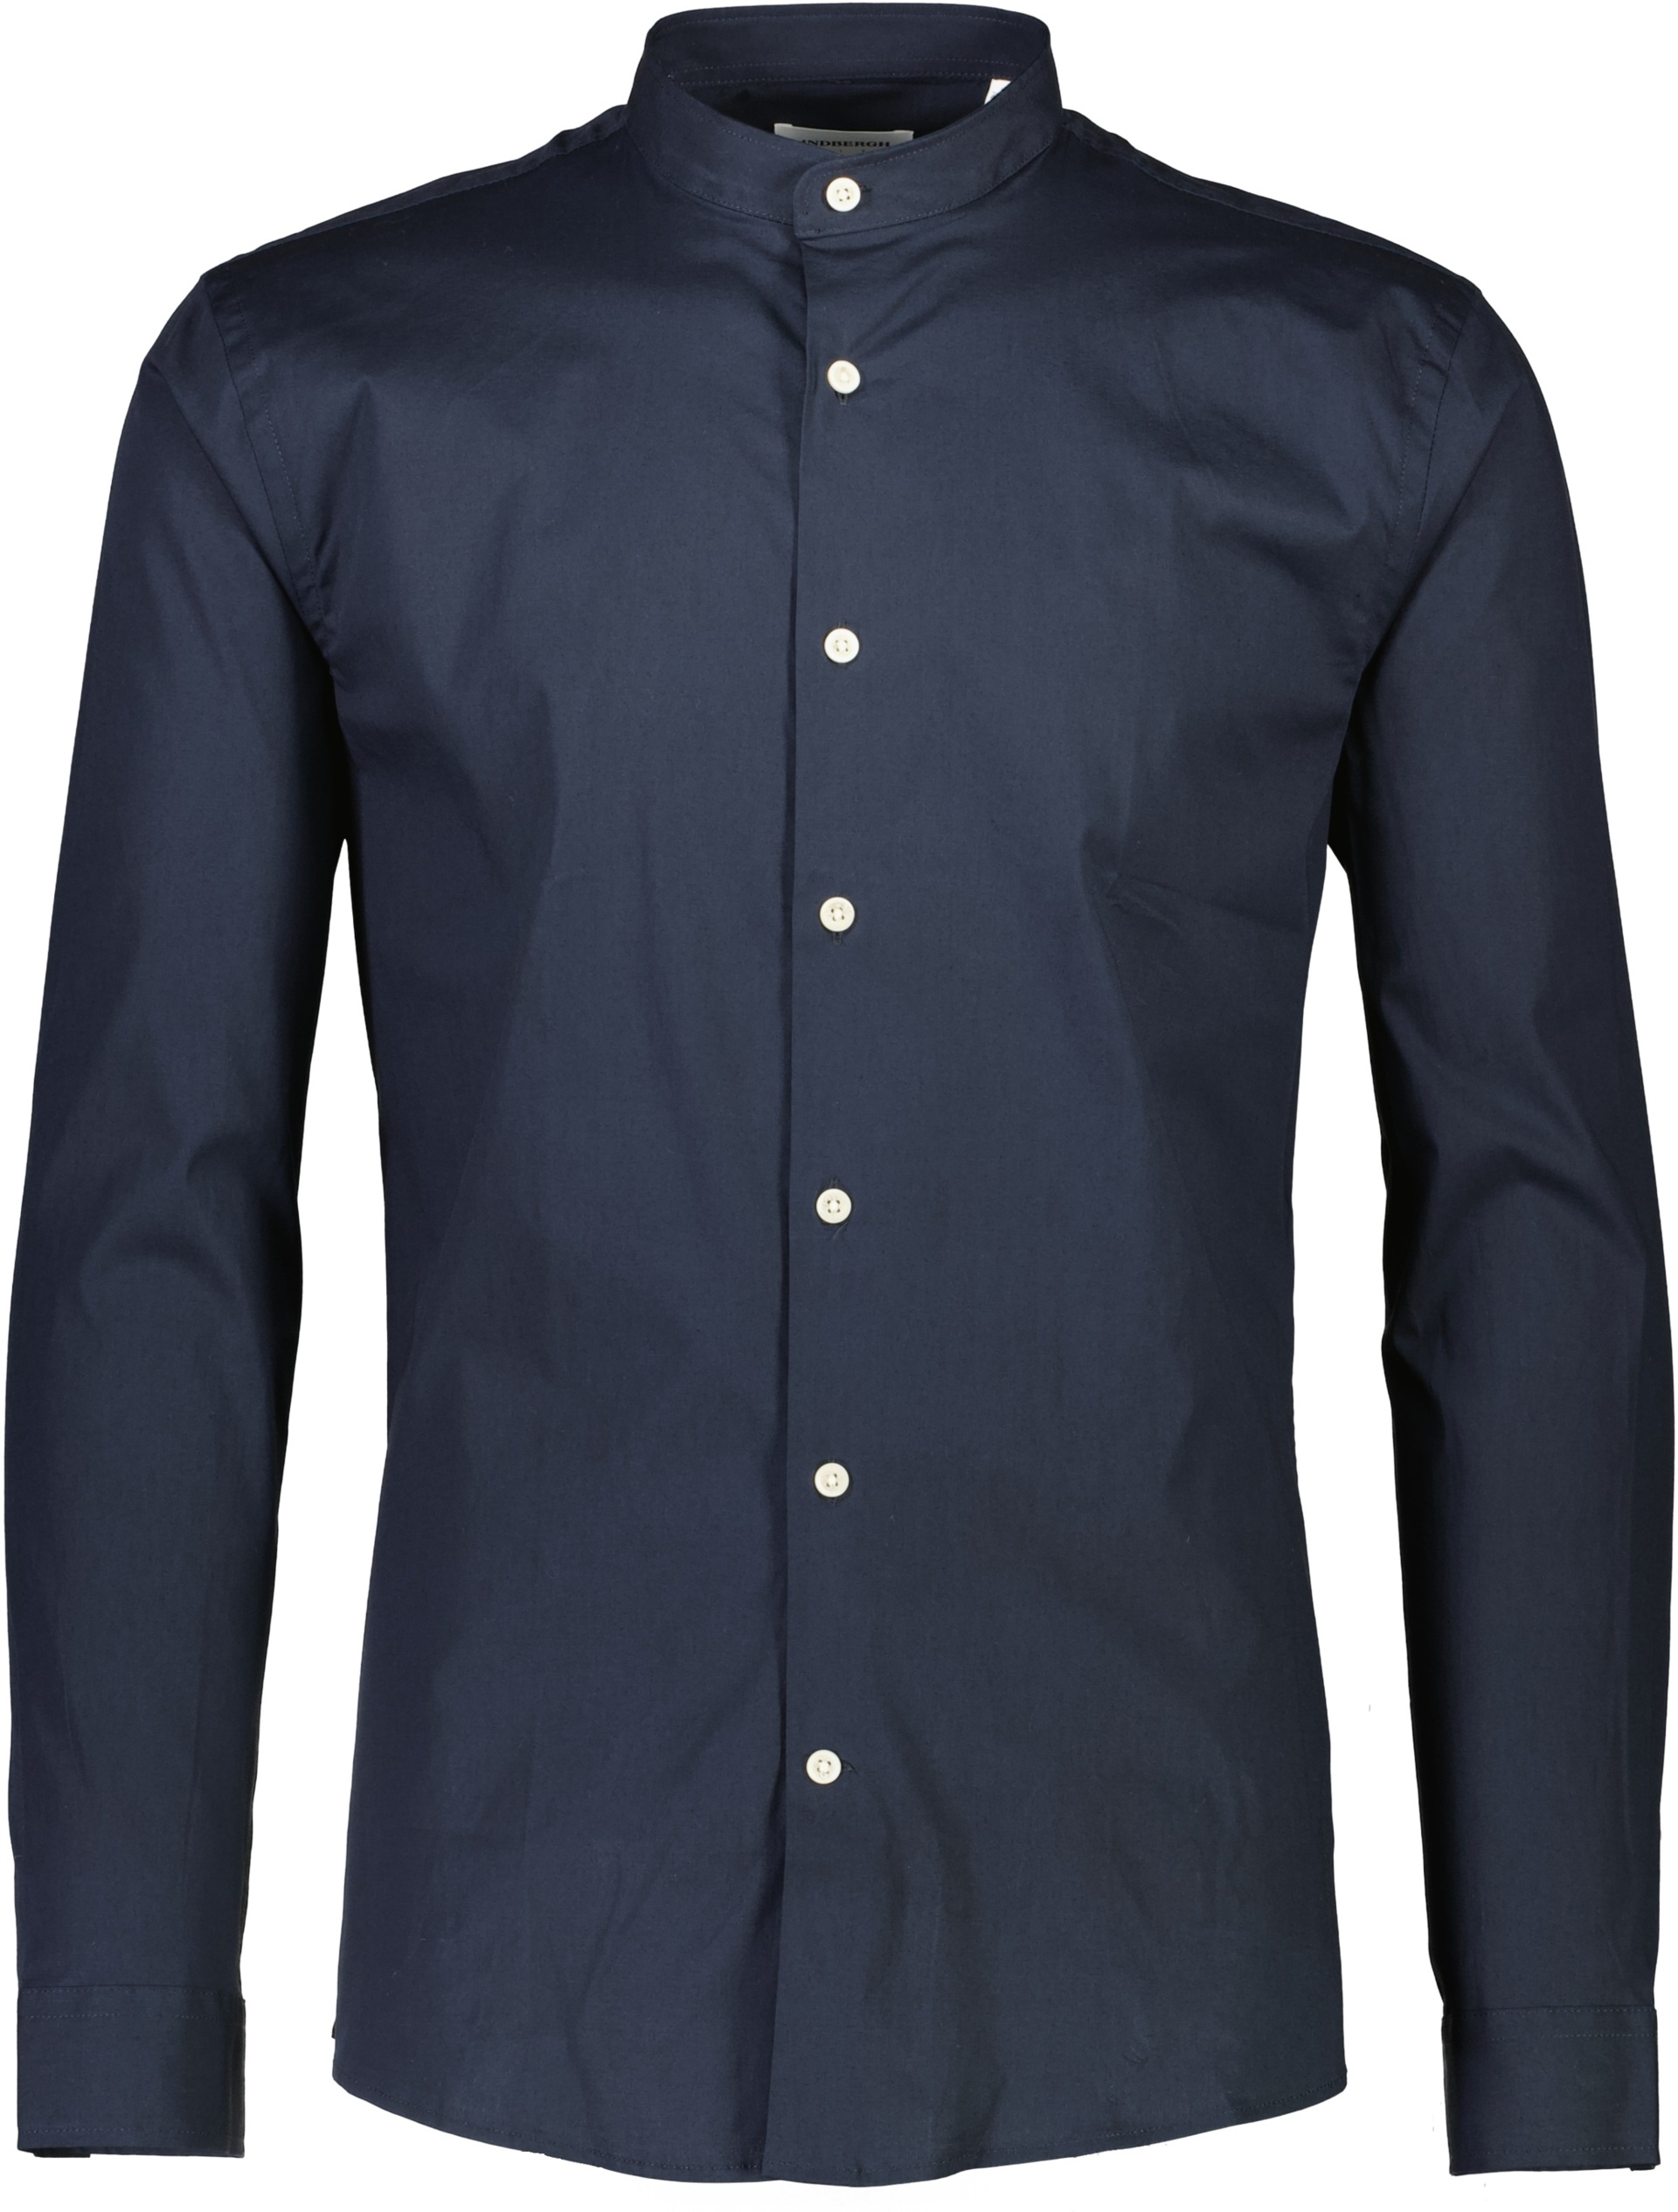 Lindbergh Business casual shirt blue / navy